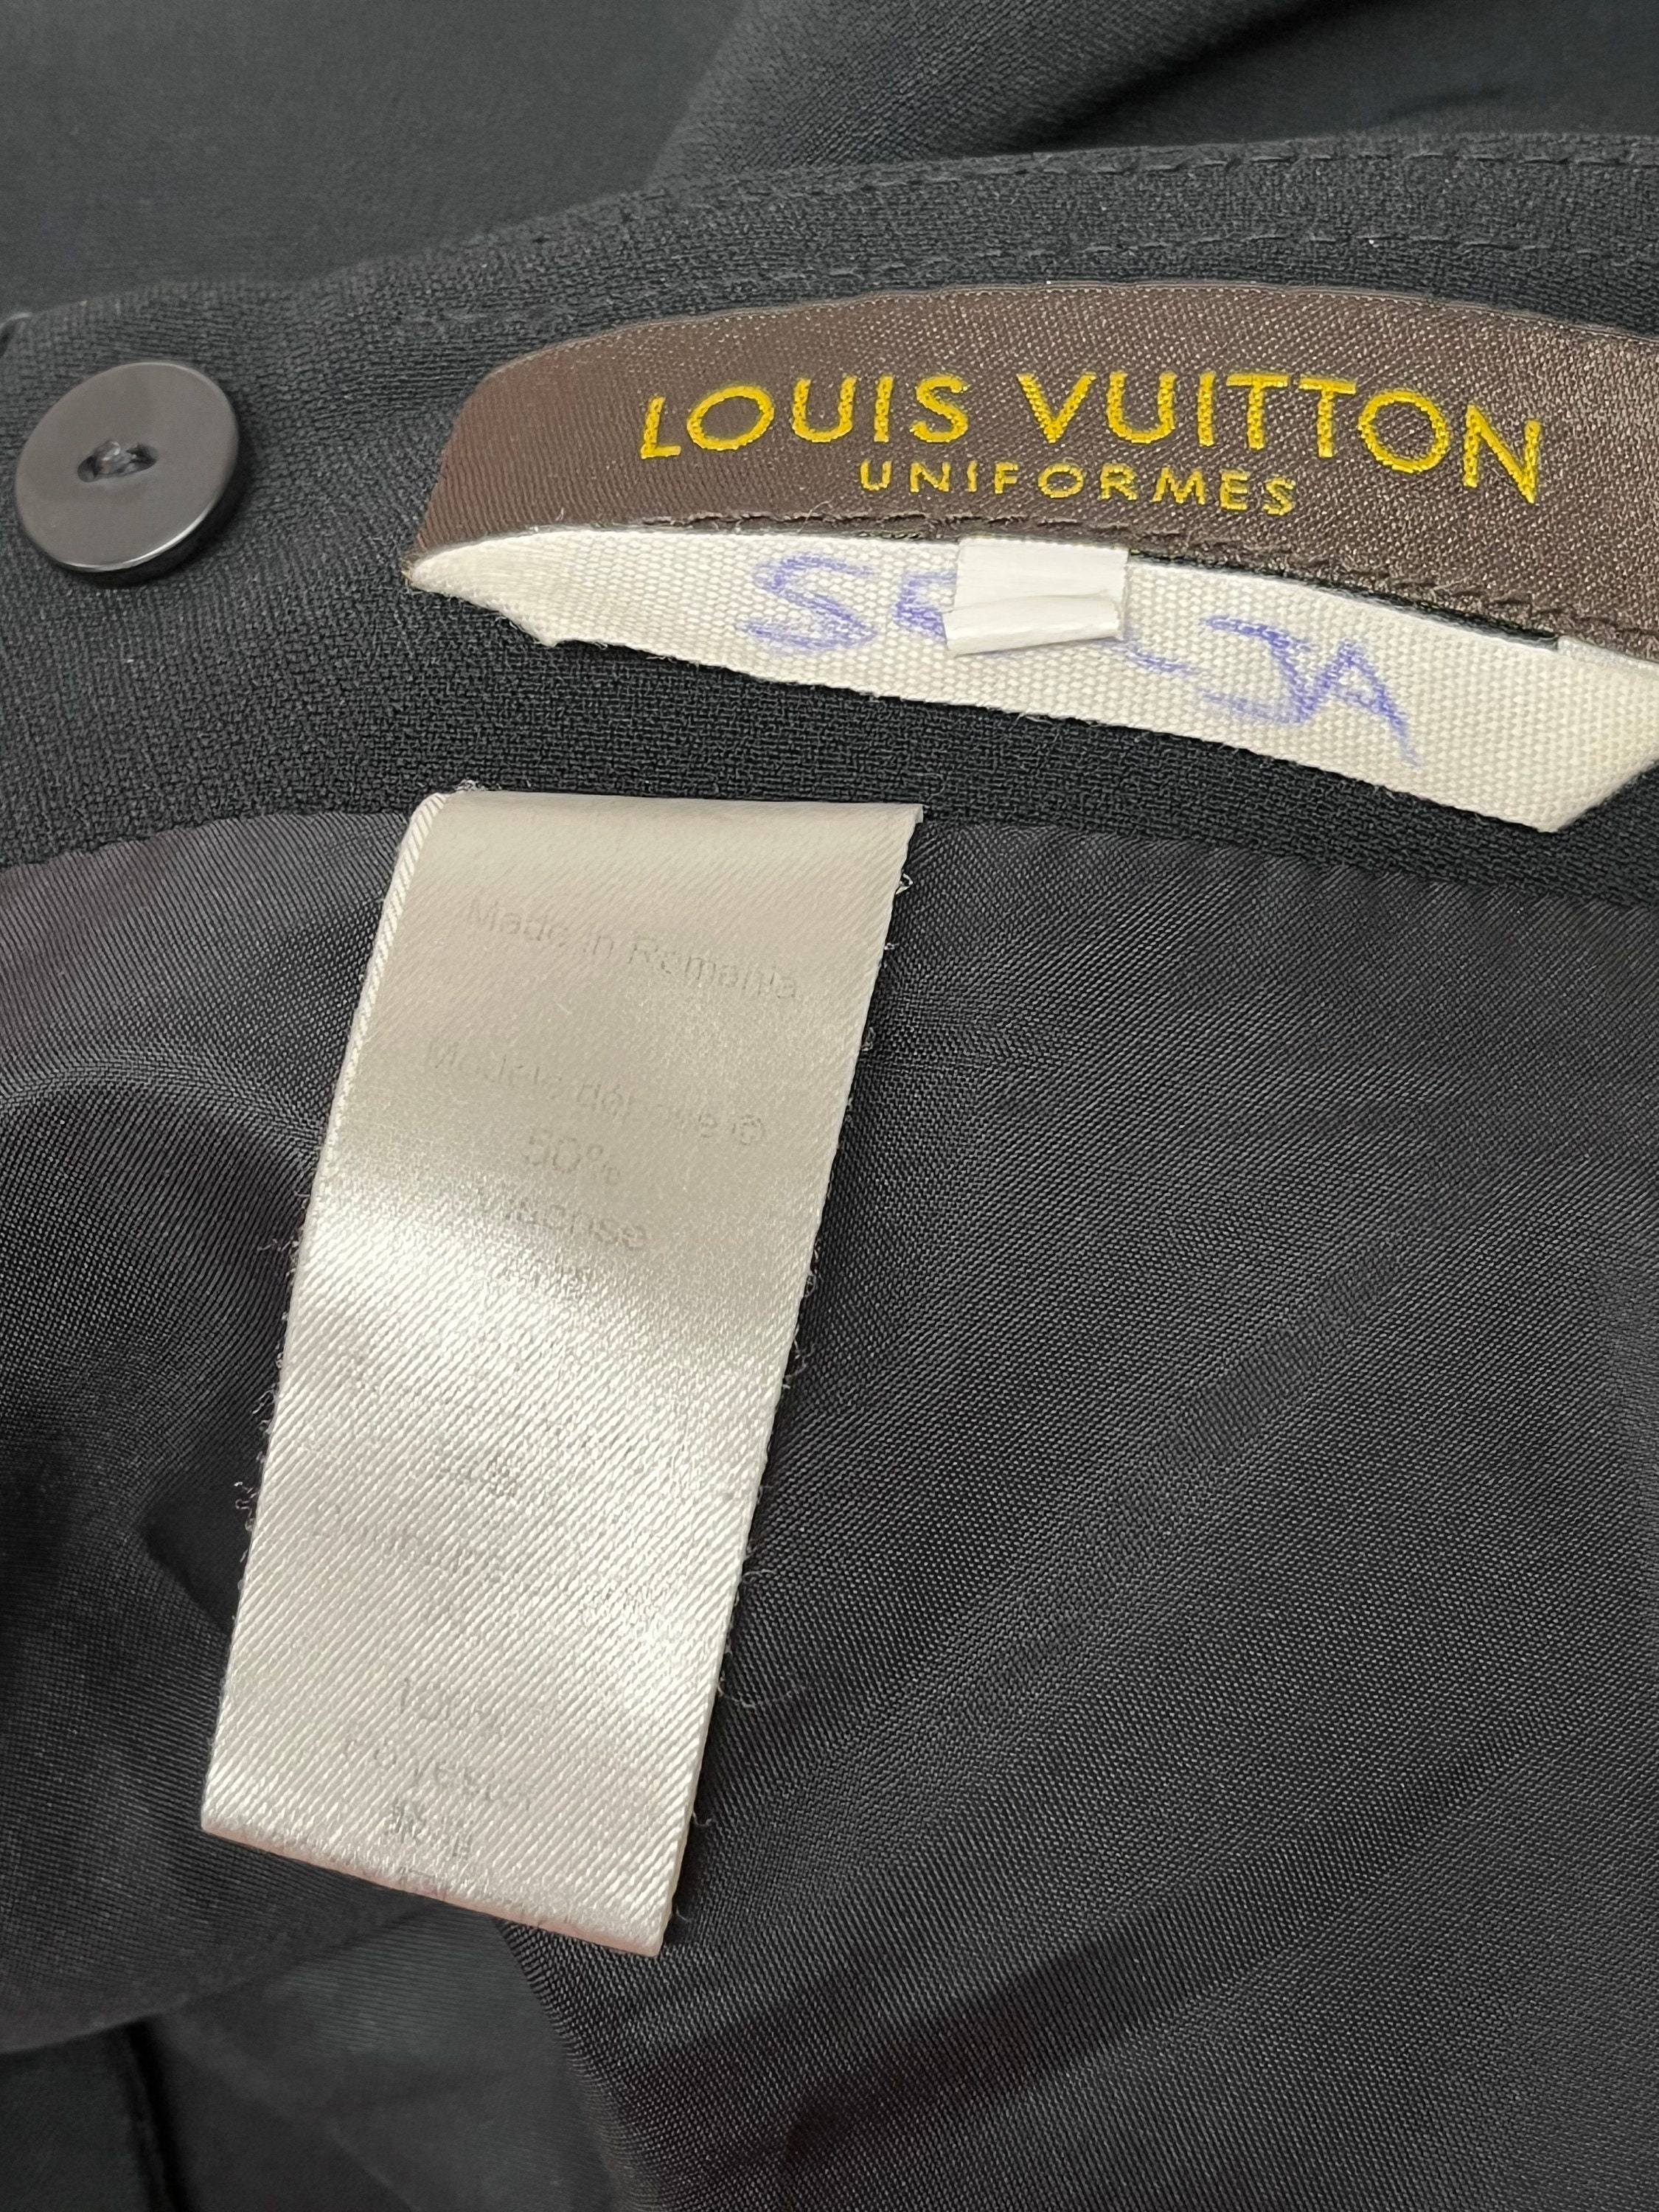 Louis Vuitton Uniformes Beautiful Black Skirt Size Medium 